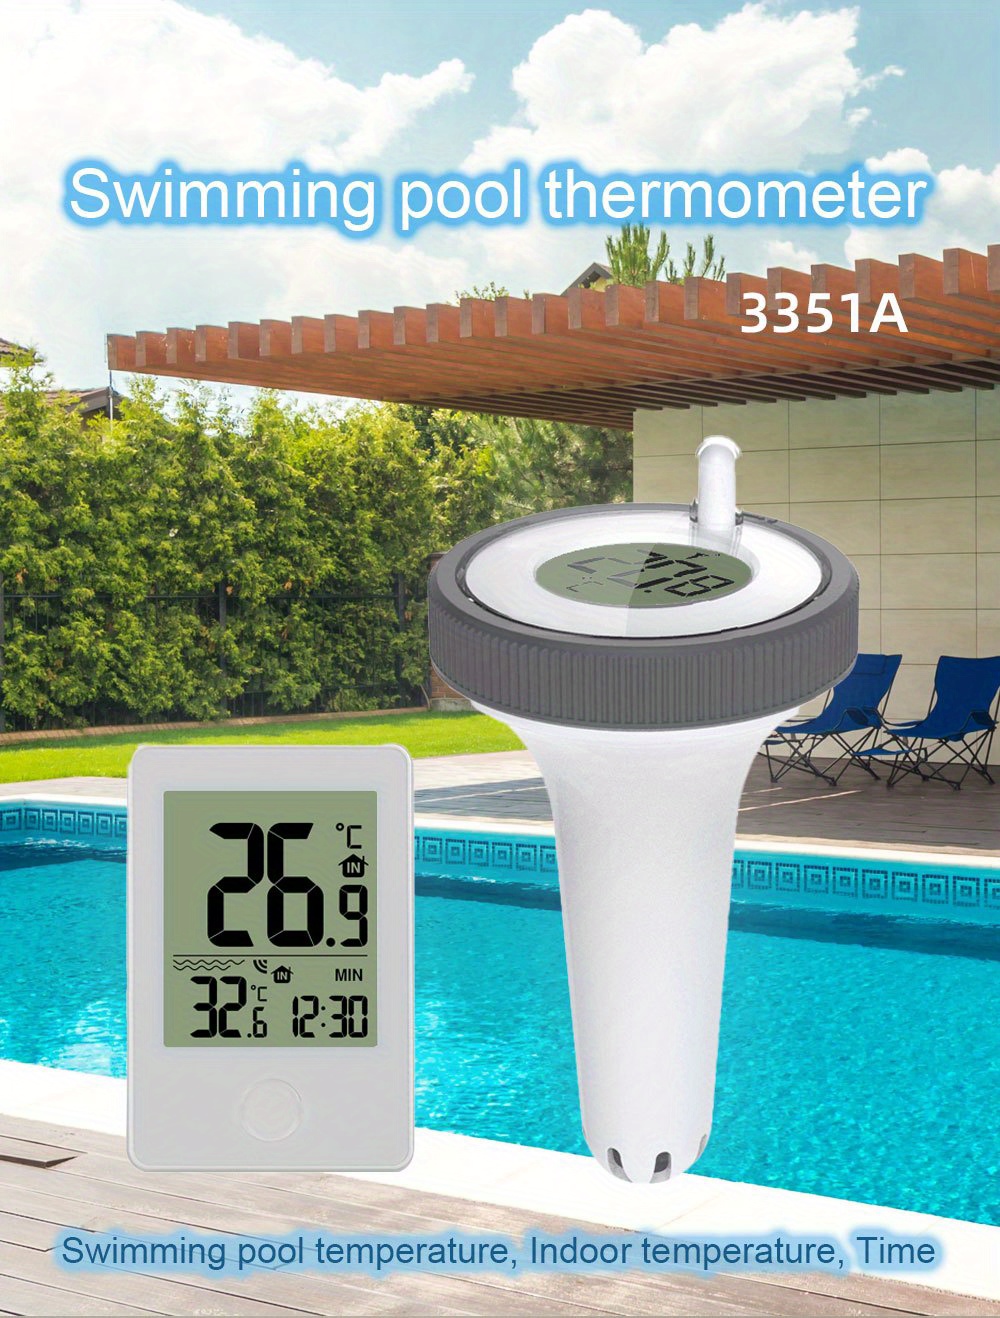 Bulk Buy China Wholesale Tx15n Wireless Swimming Pool Thermometer